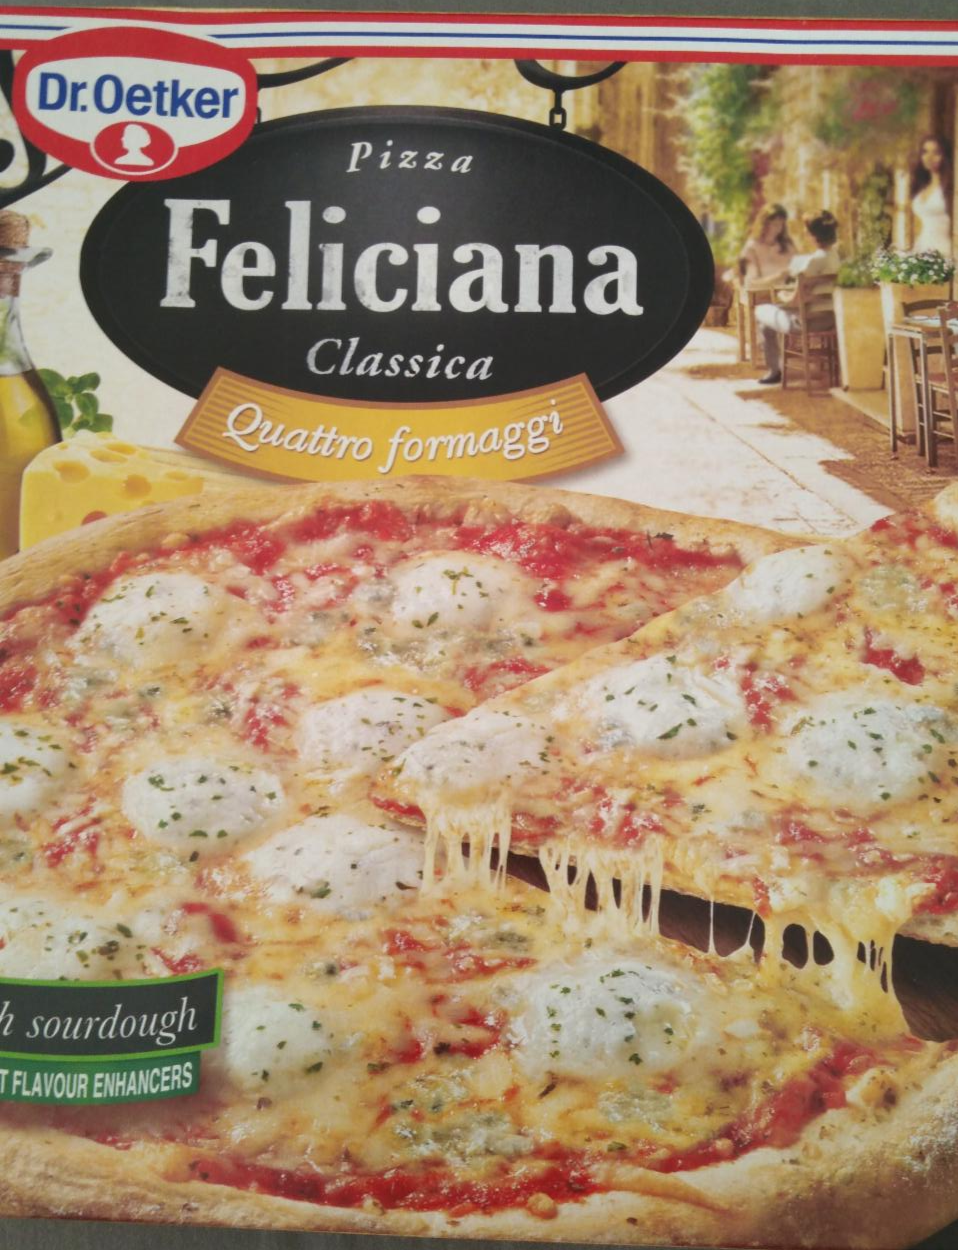 Képek - Pizza Feliciana classica quatro formaggi Dr.Oetker